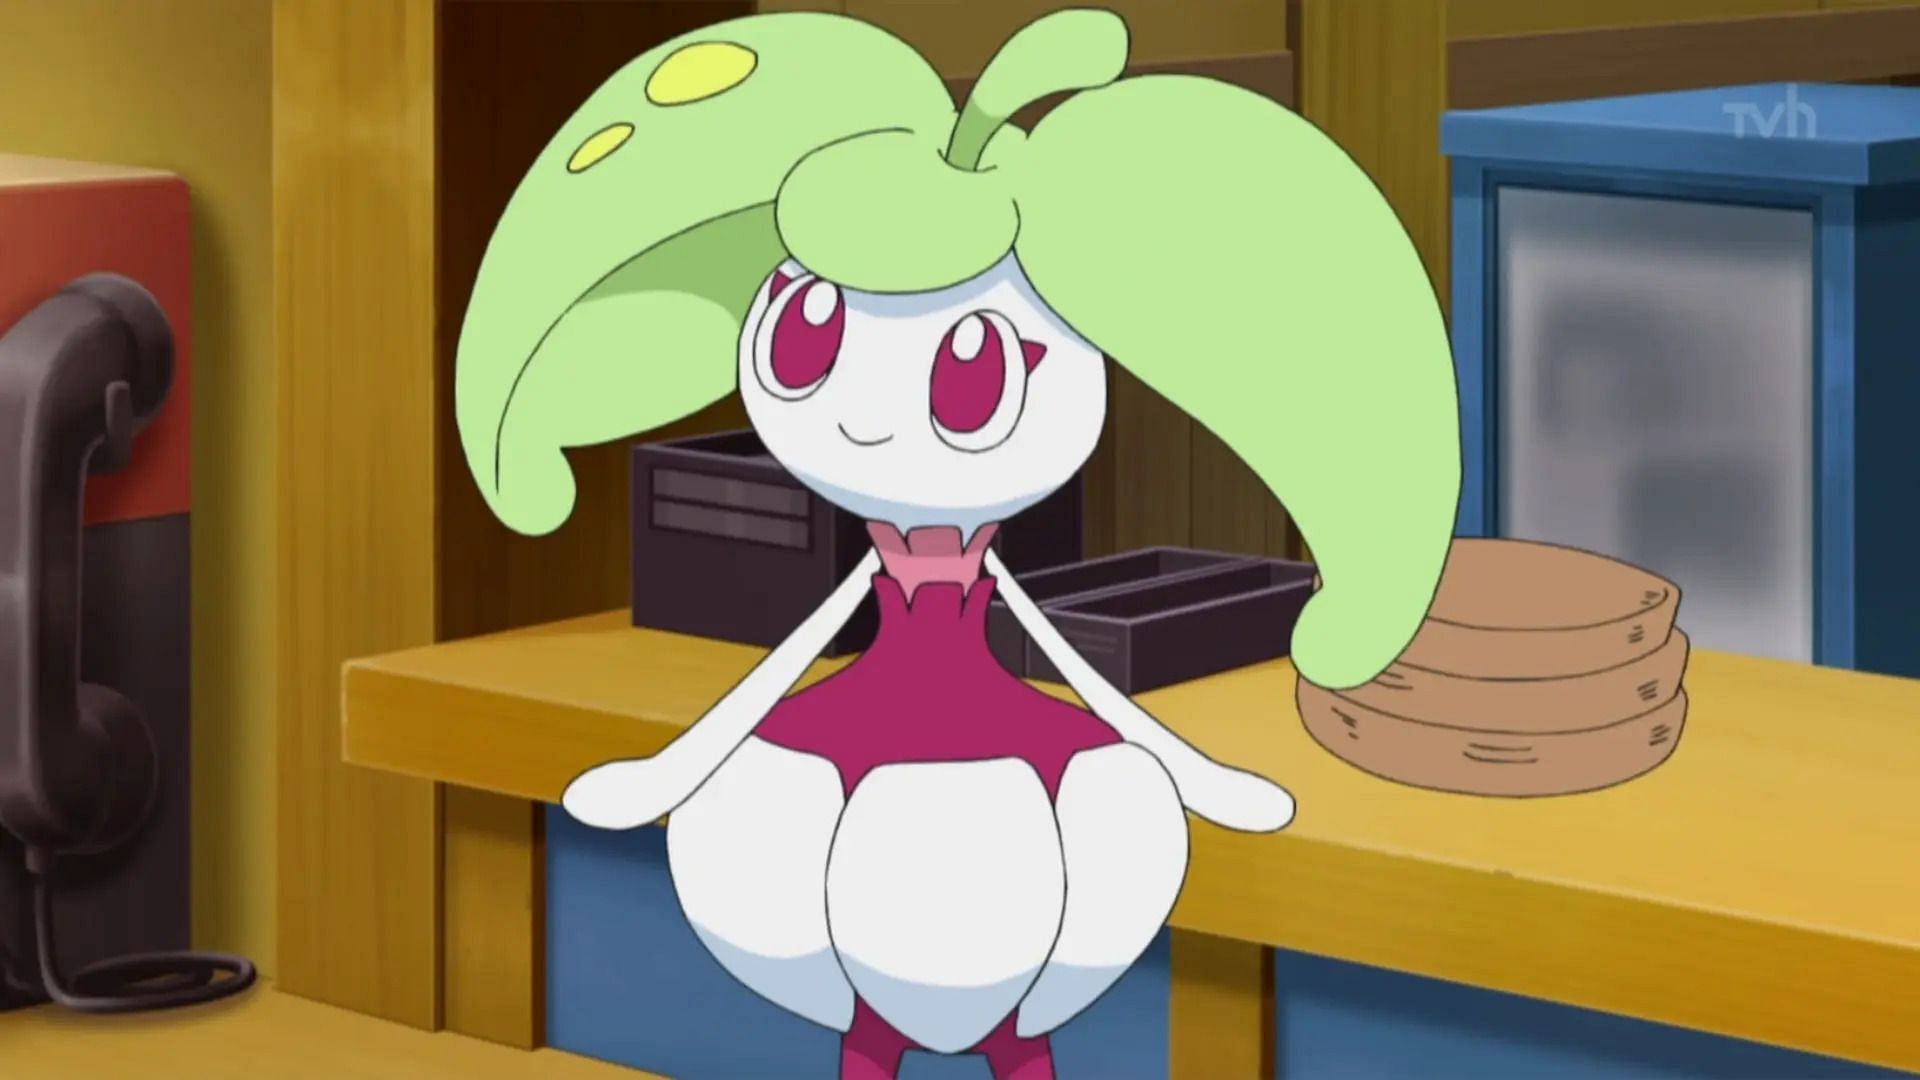 Steenee (Image via The Pokemon Company)